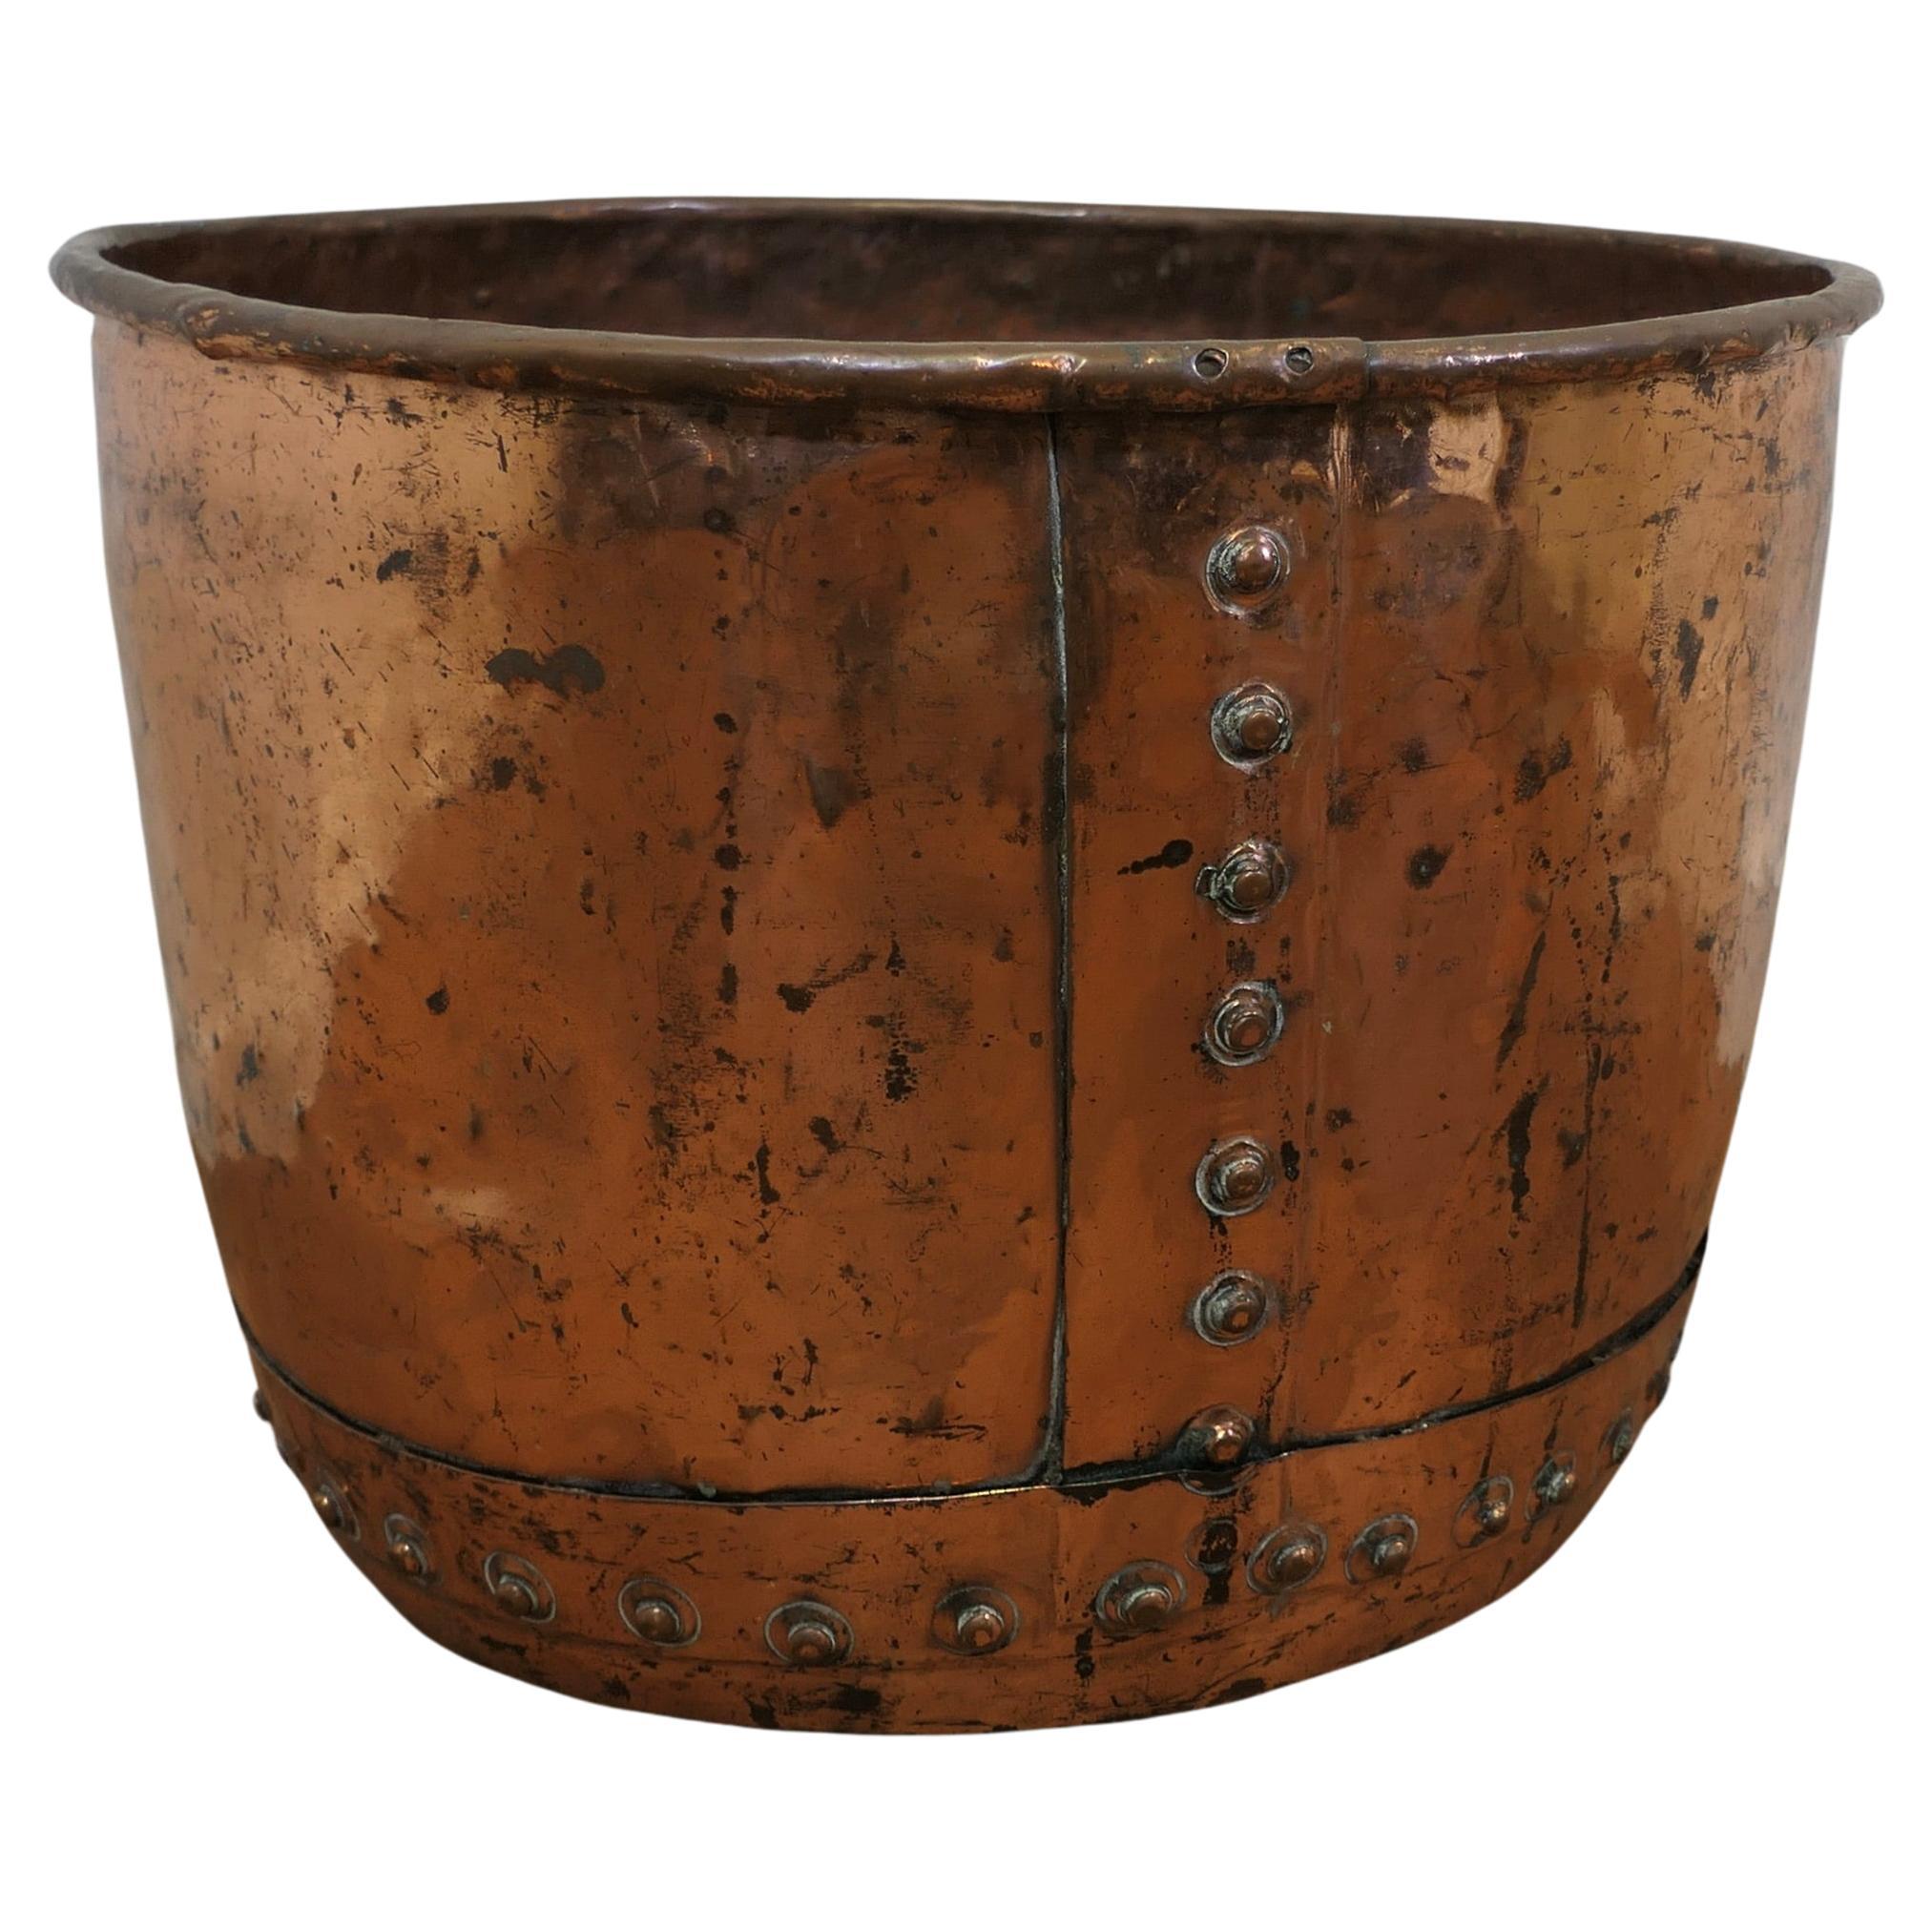 19th Century Copper Log Bin or Cauldron Planter   